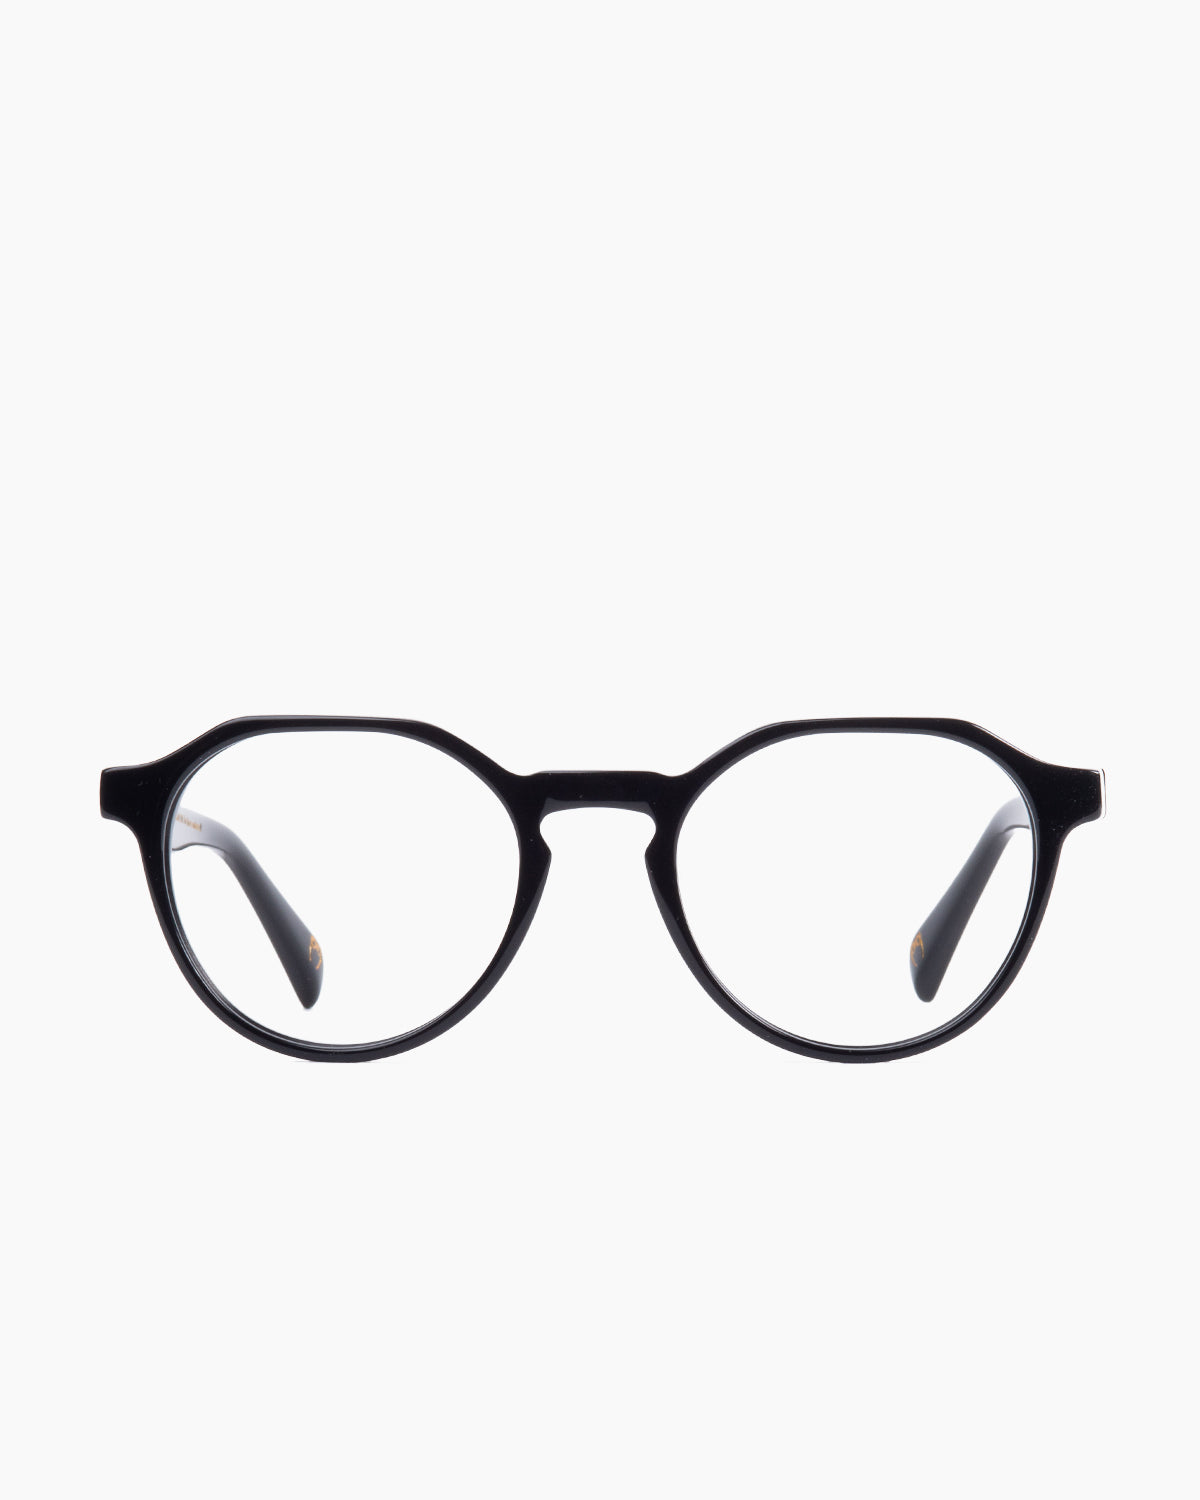 Spectacleeyeworks - Amir - 306 | glasses bar